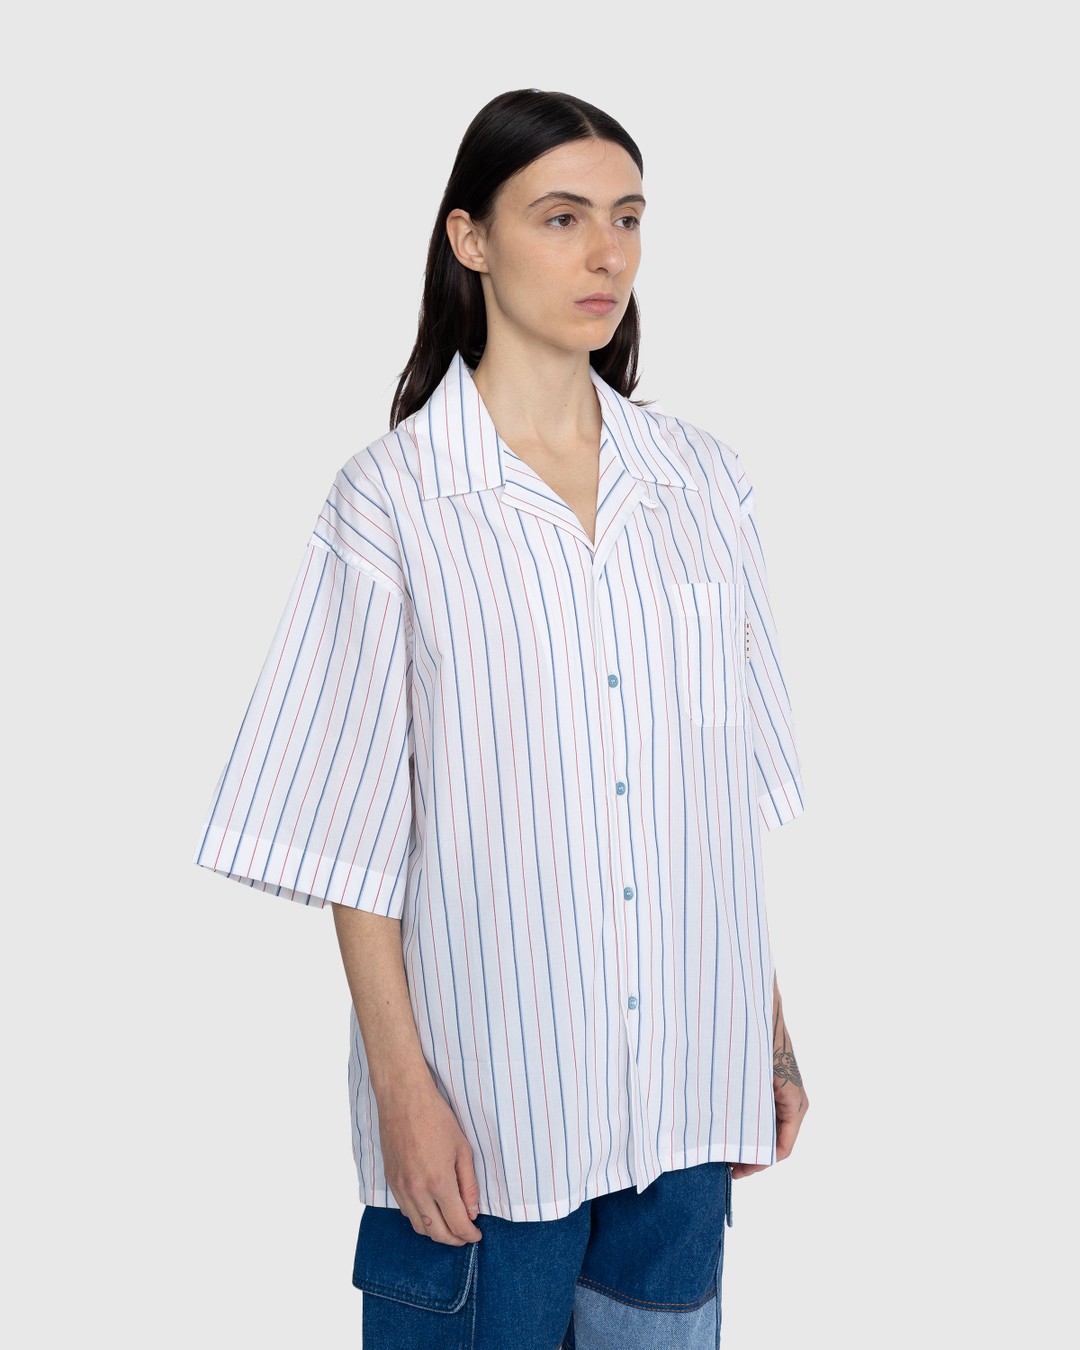 Marni – Striped Button-Up Shirt White - Shirts - White - Image 4